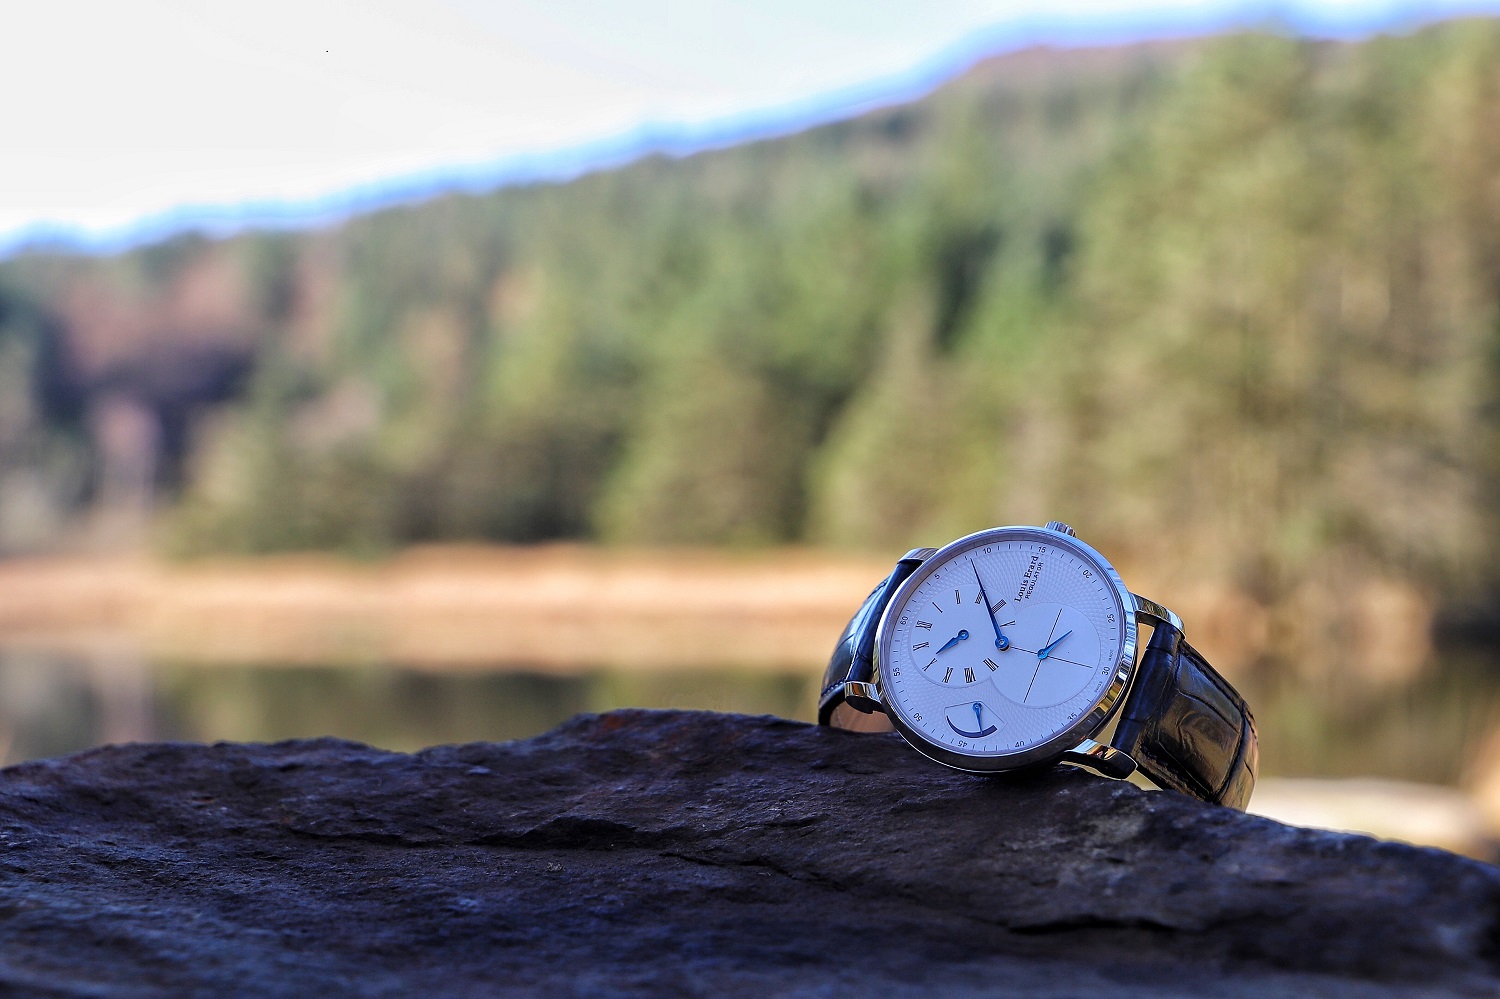 louis erard ルイエラール 82-0900 YG×SS ホワイト文字盤 腕時計(アナログ) 低価格で大人気の